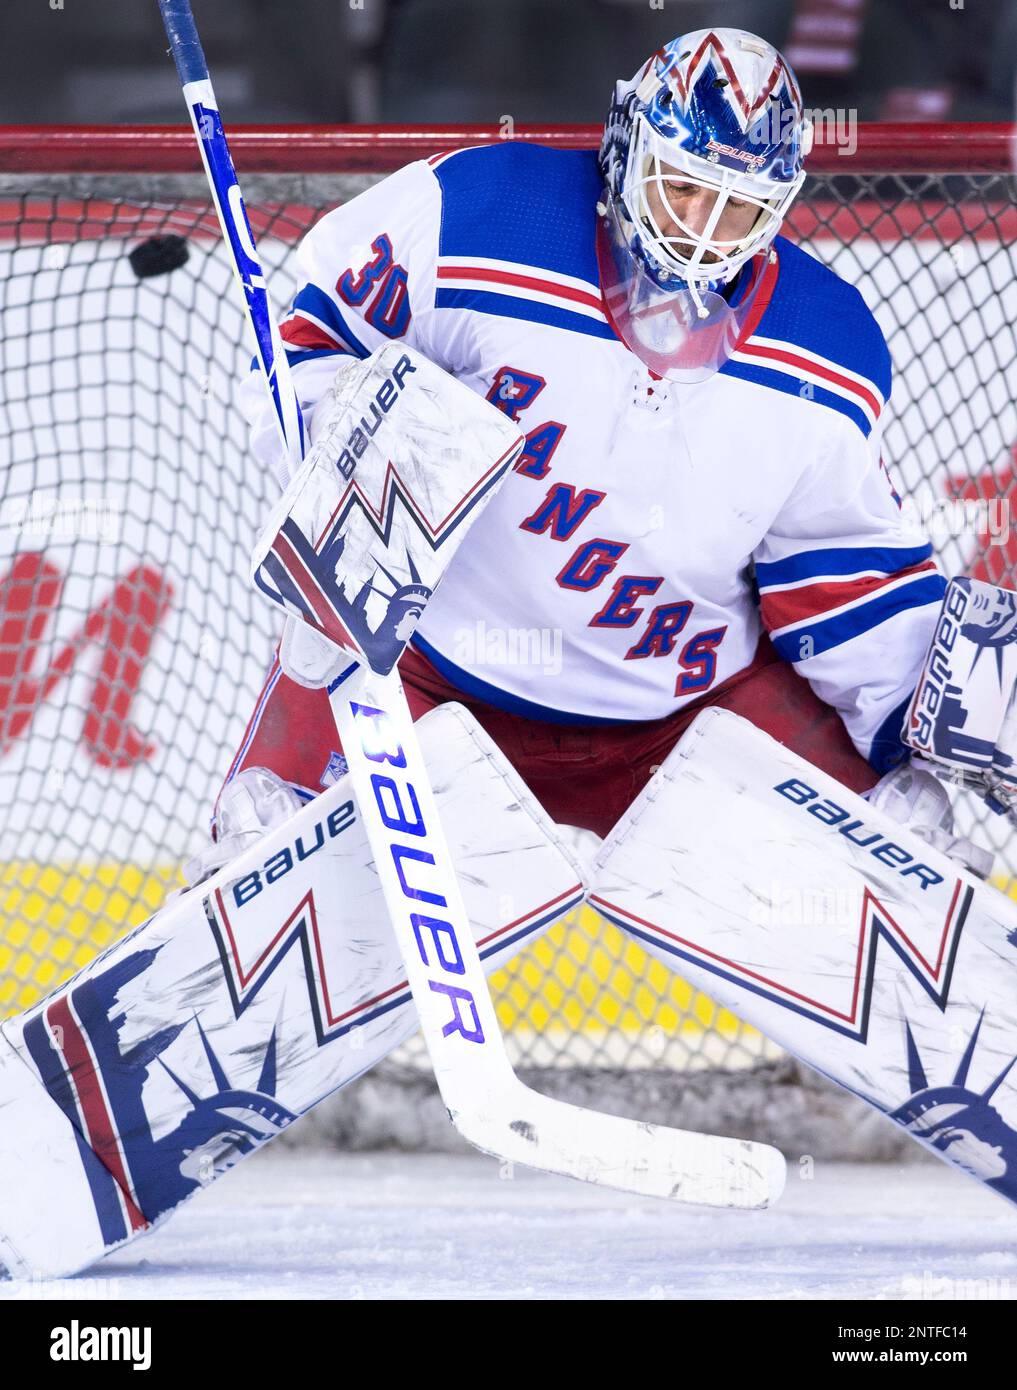 NHL player profile photo on New York Rangers' goalie Henrik